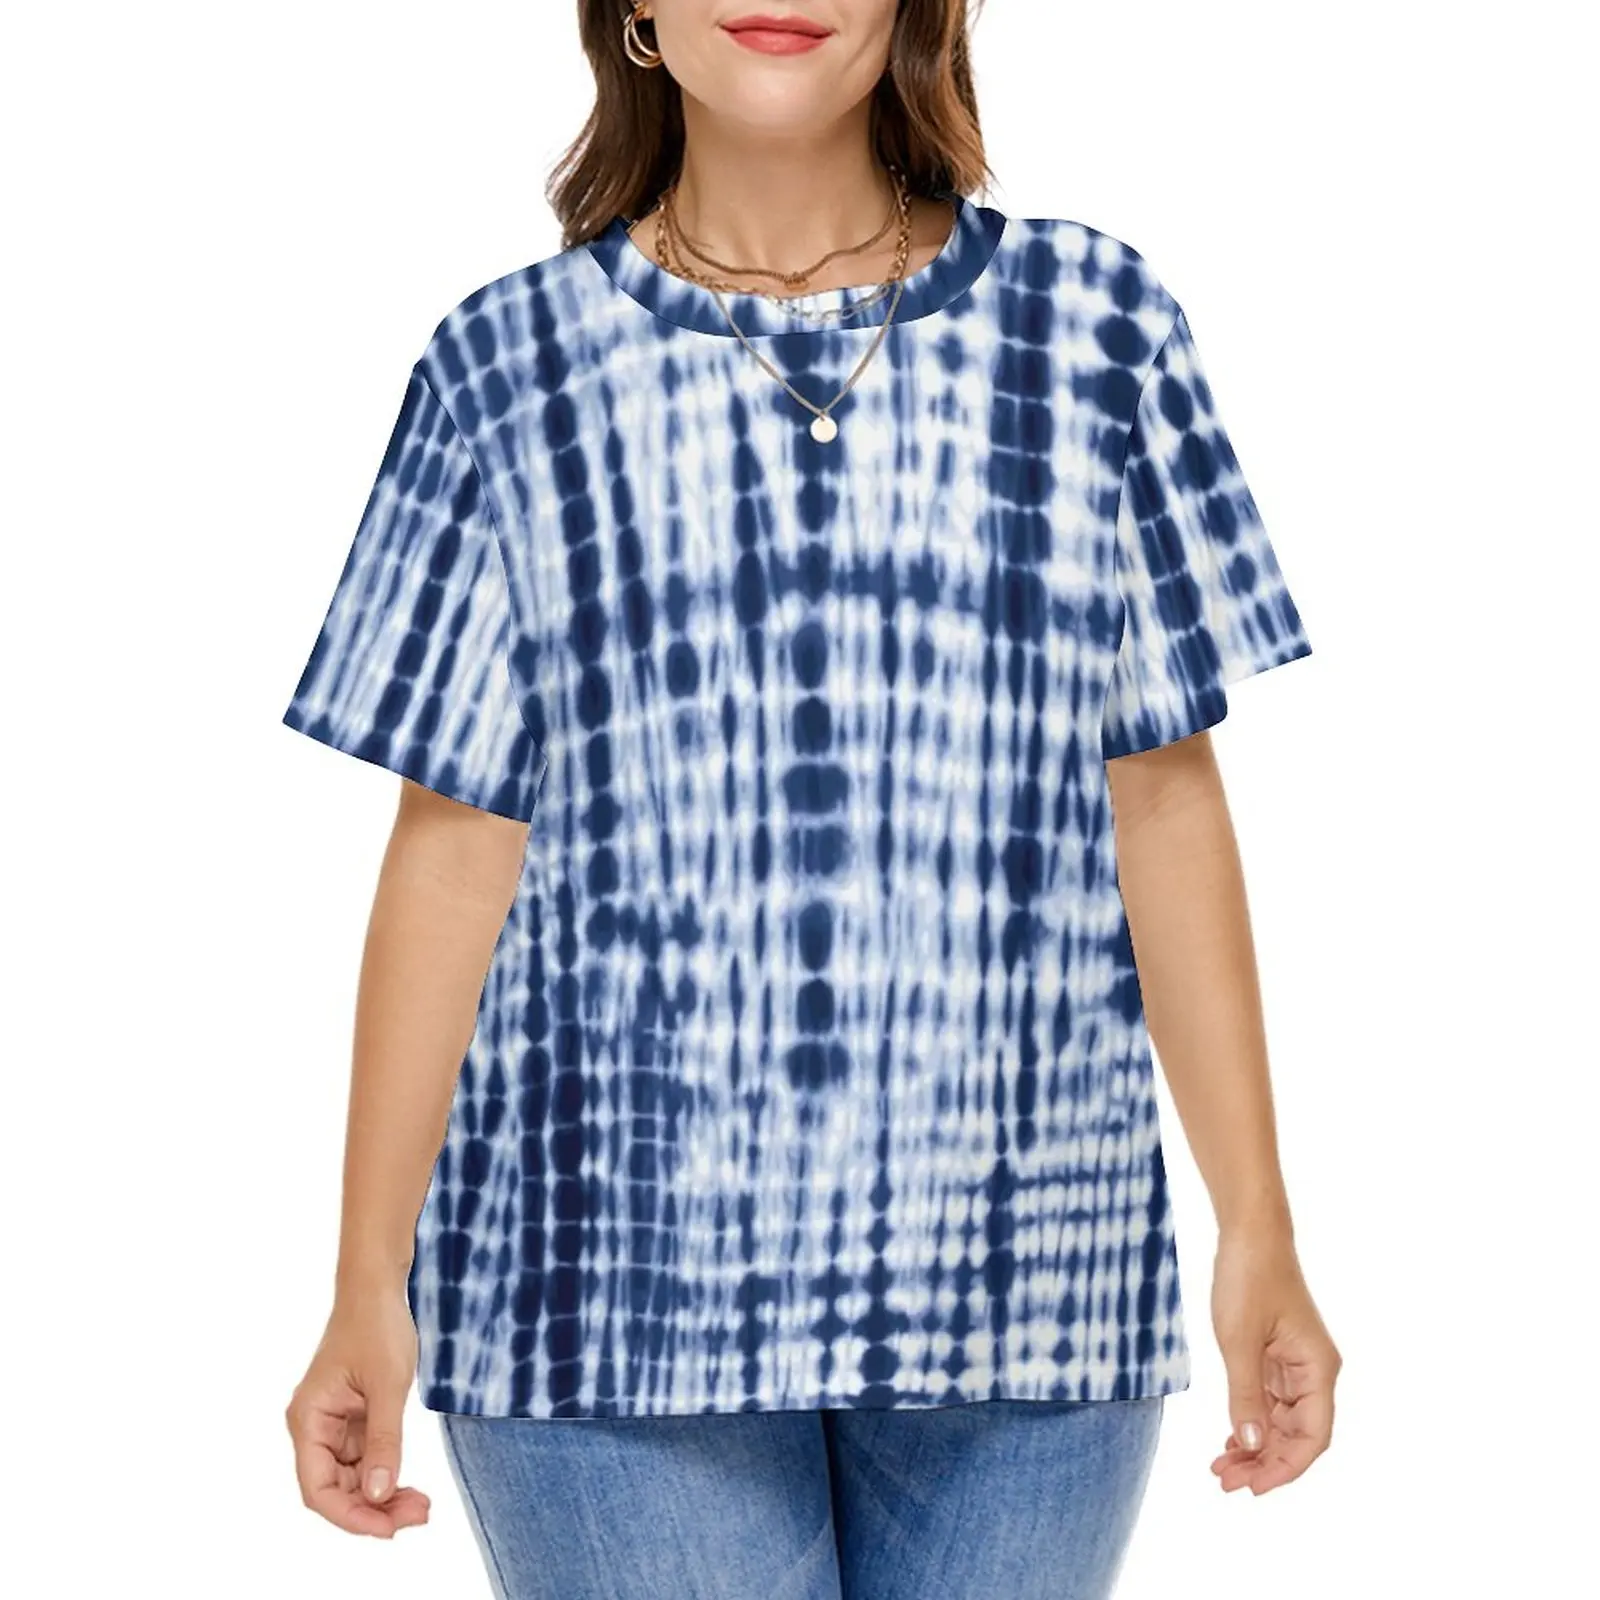 Blue Tie Dye Pattern T-Shirts Artistic Vintage Print Classic T Shirt Short-Sleeve Cute Tee Shirt Sexy Top Tees Plus Size 5XL 6XL